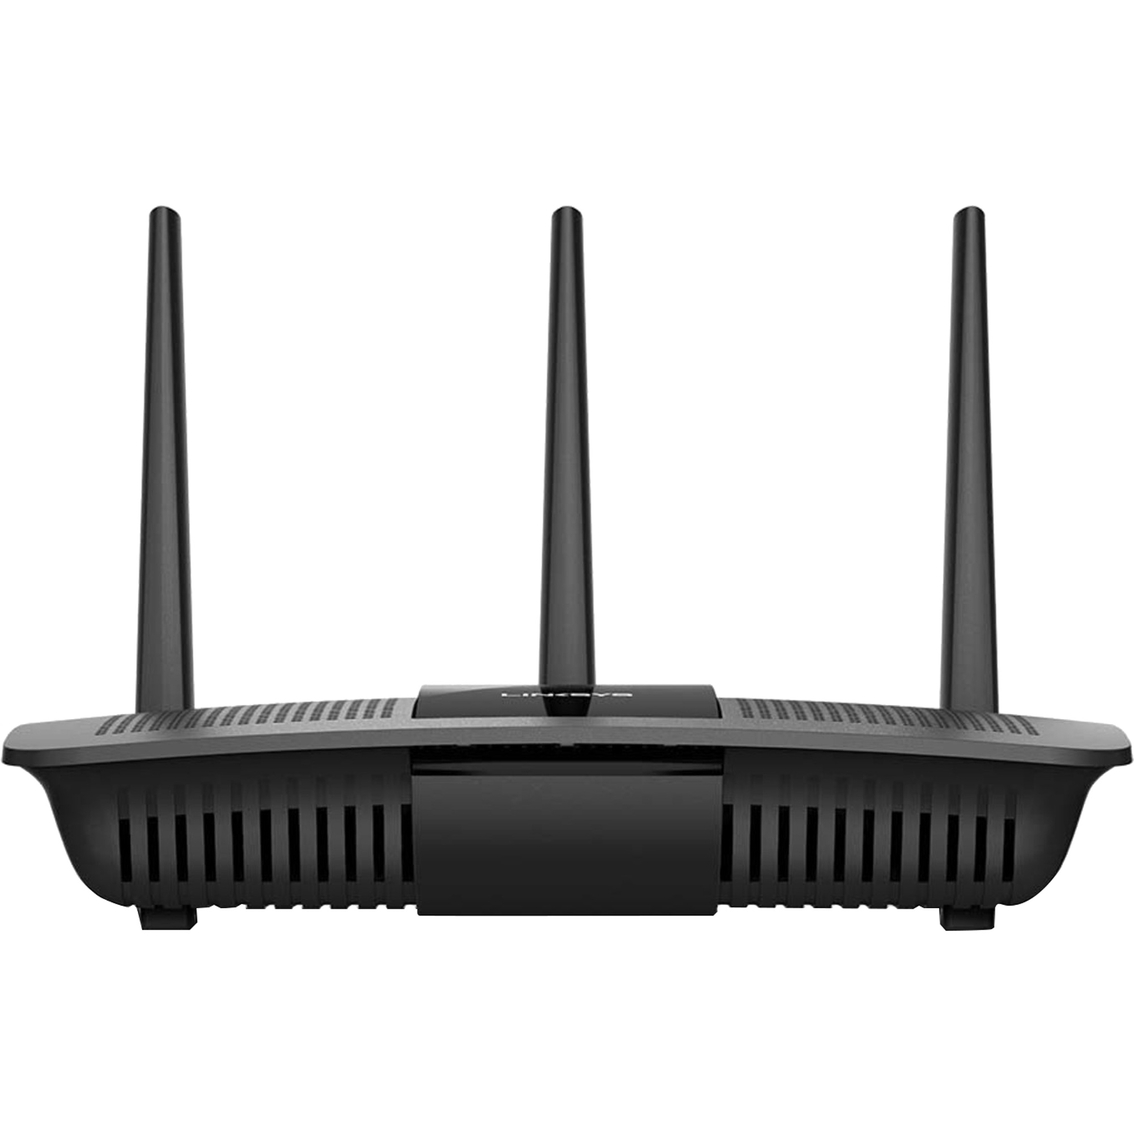 Linksys AC1900 MU MIMO Gigabit Wi-Fi Router, Black - Image 4 of 4